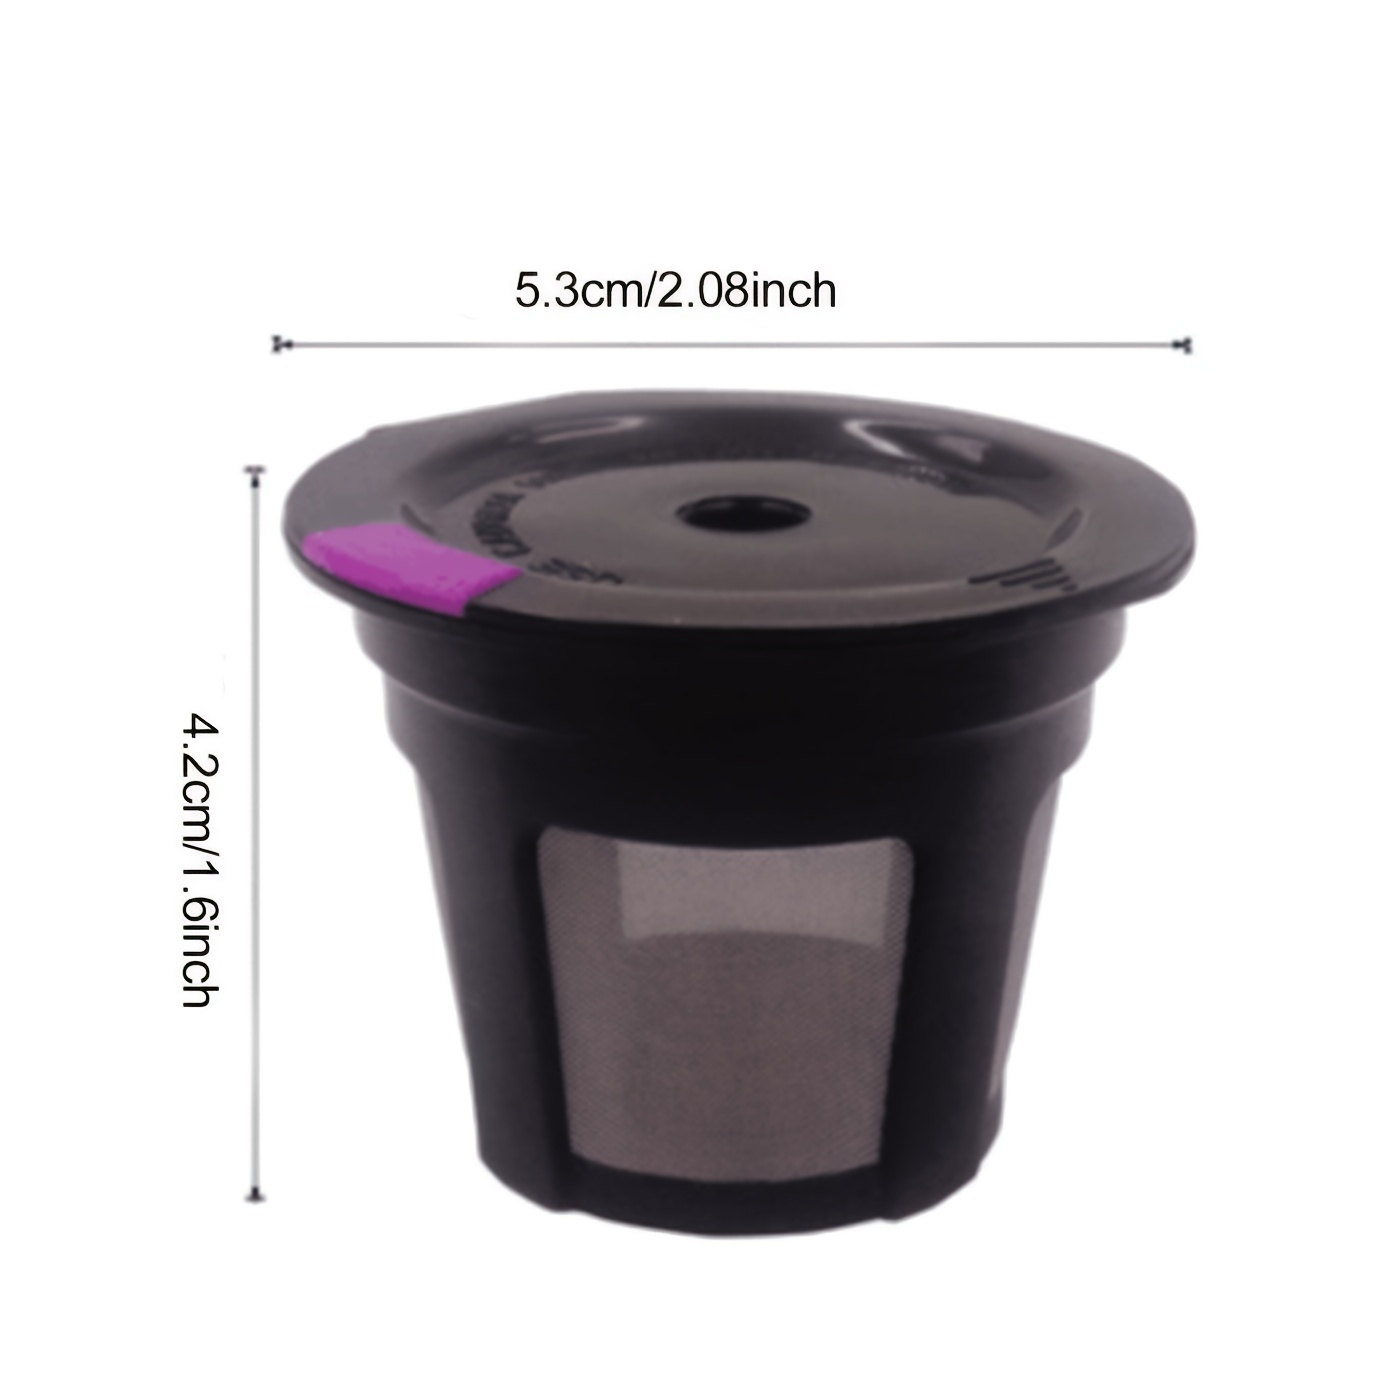 Reusable Coffee Filter For Keurig 1.0 & 2.0 - K-cup Alternative